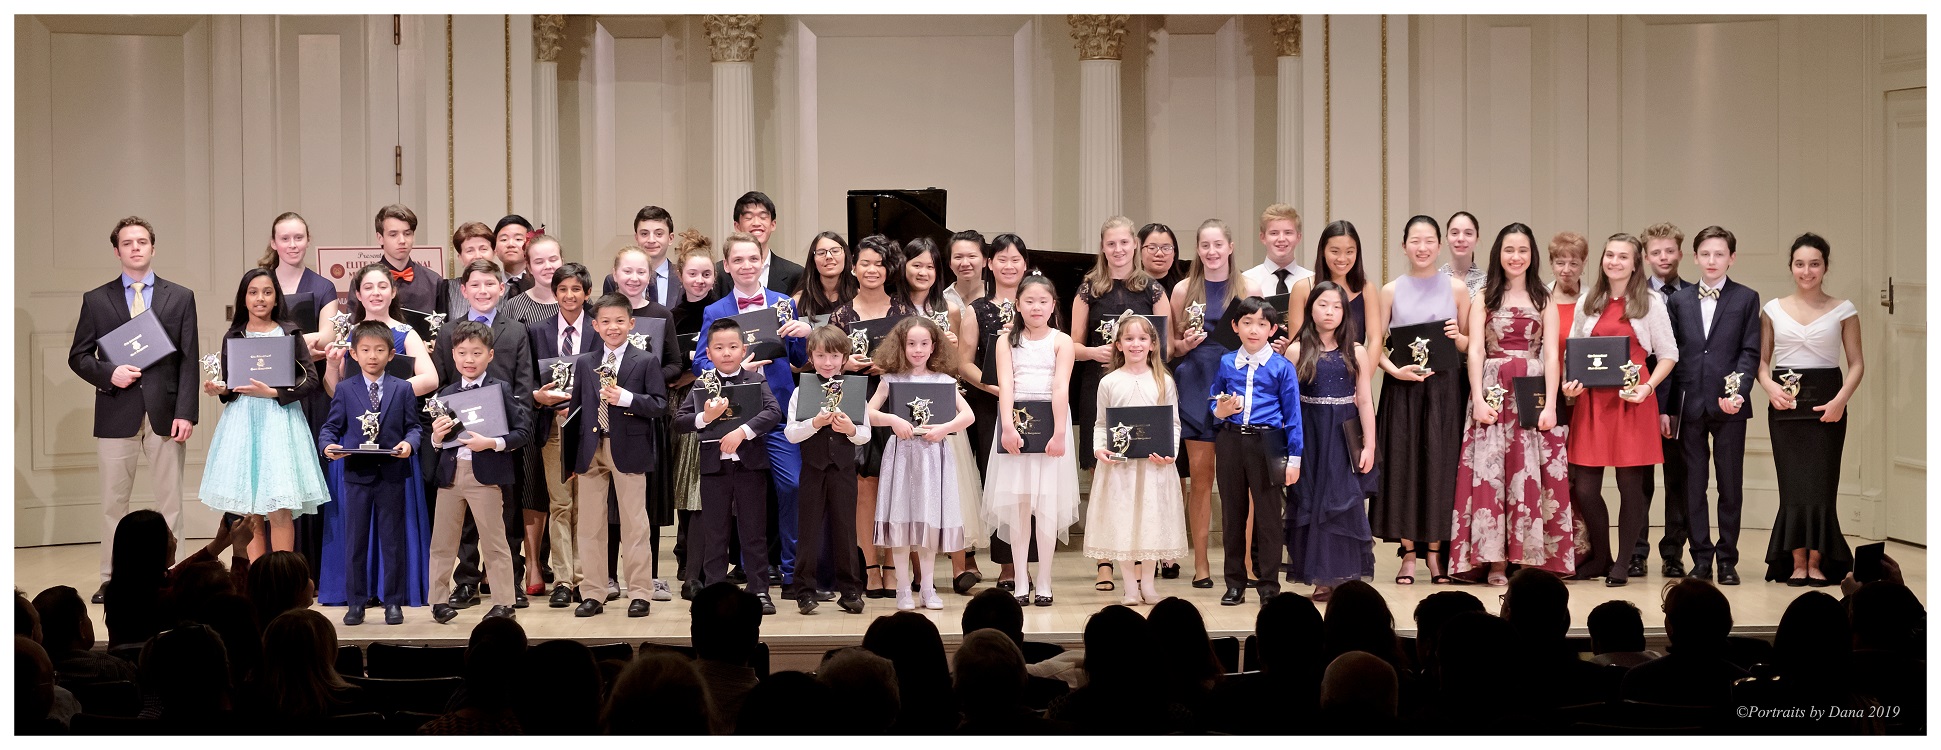 Carnegie Hall, April 7, 2019 at 7:30 p.m.